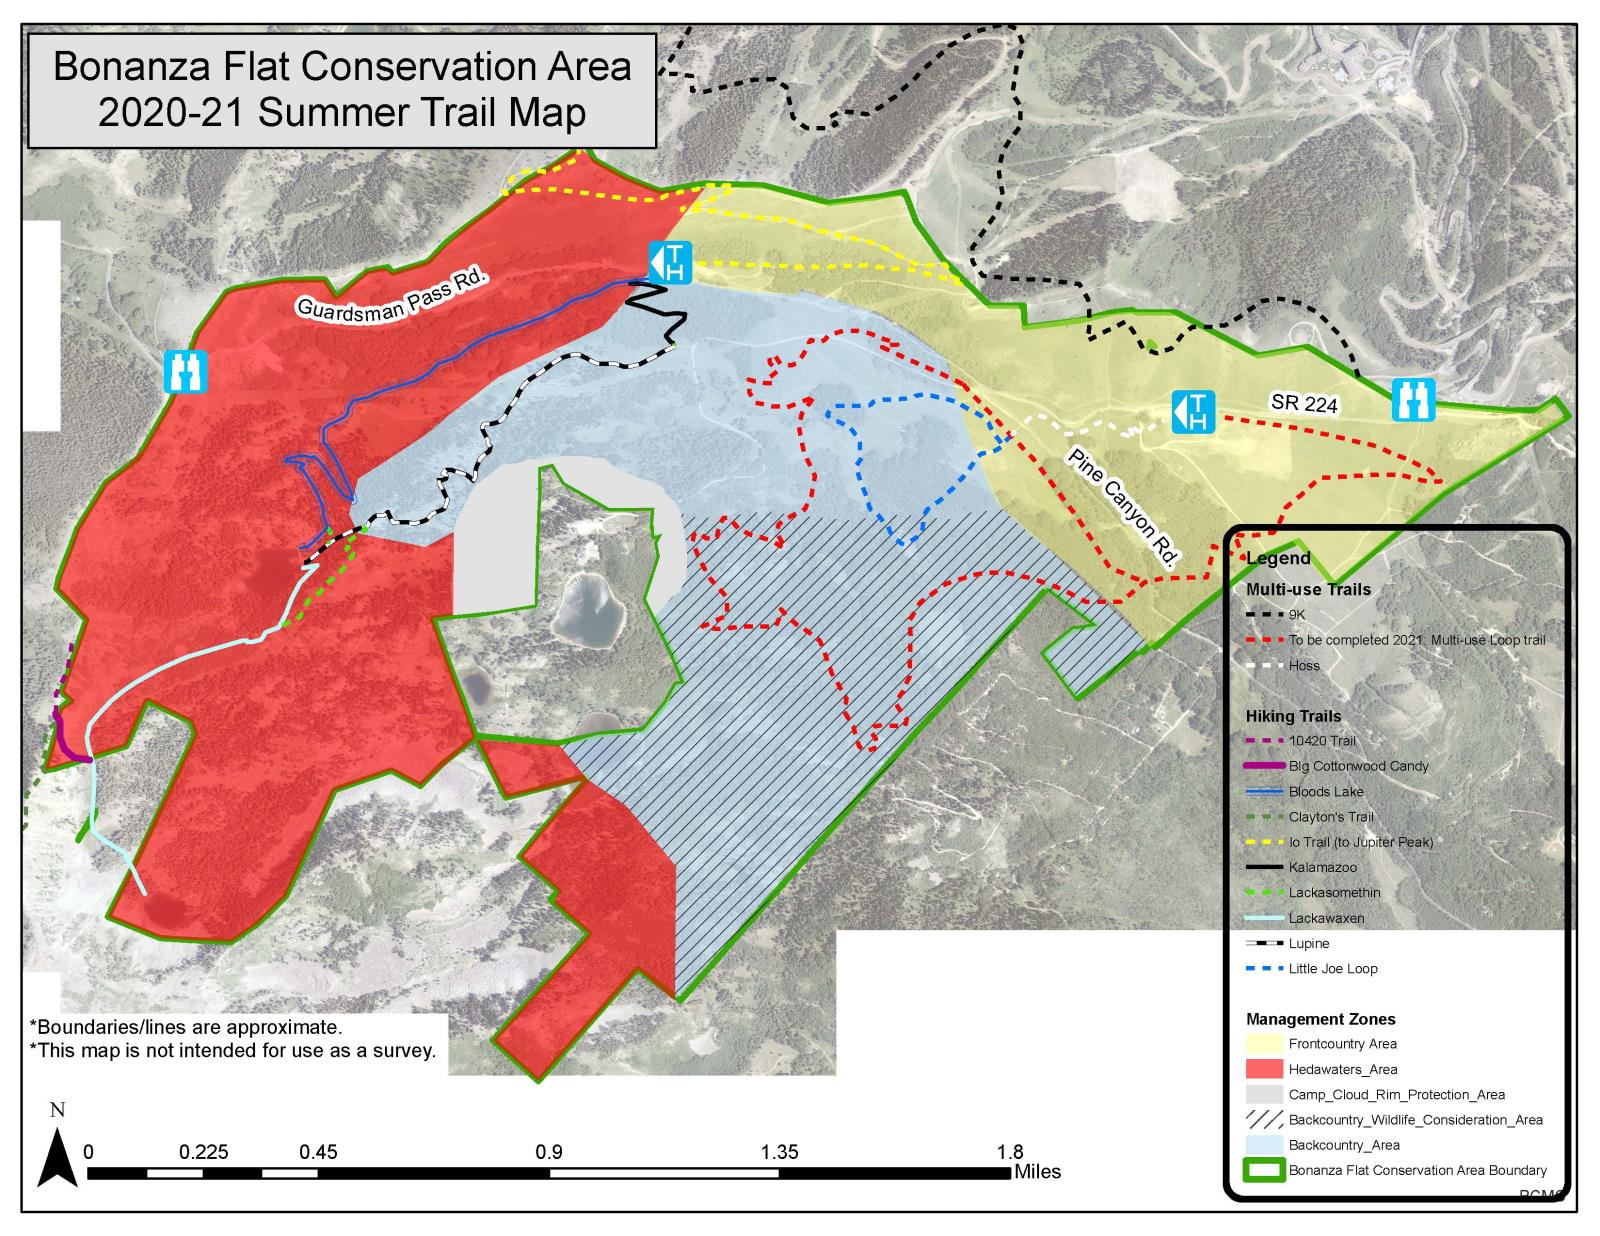 Bonanza Flat Conservation Area: Summer Trail Map 2020-21